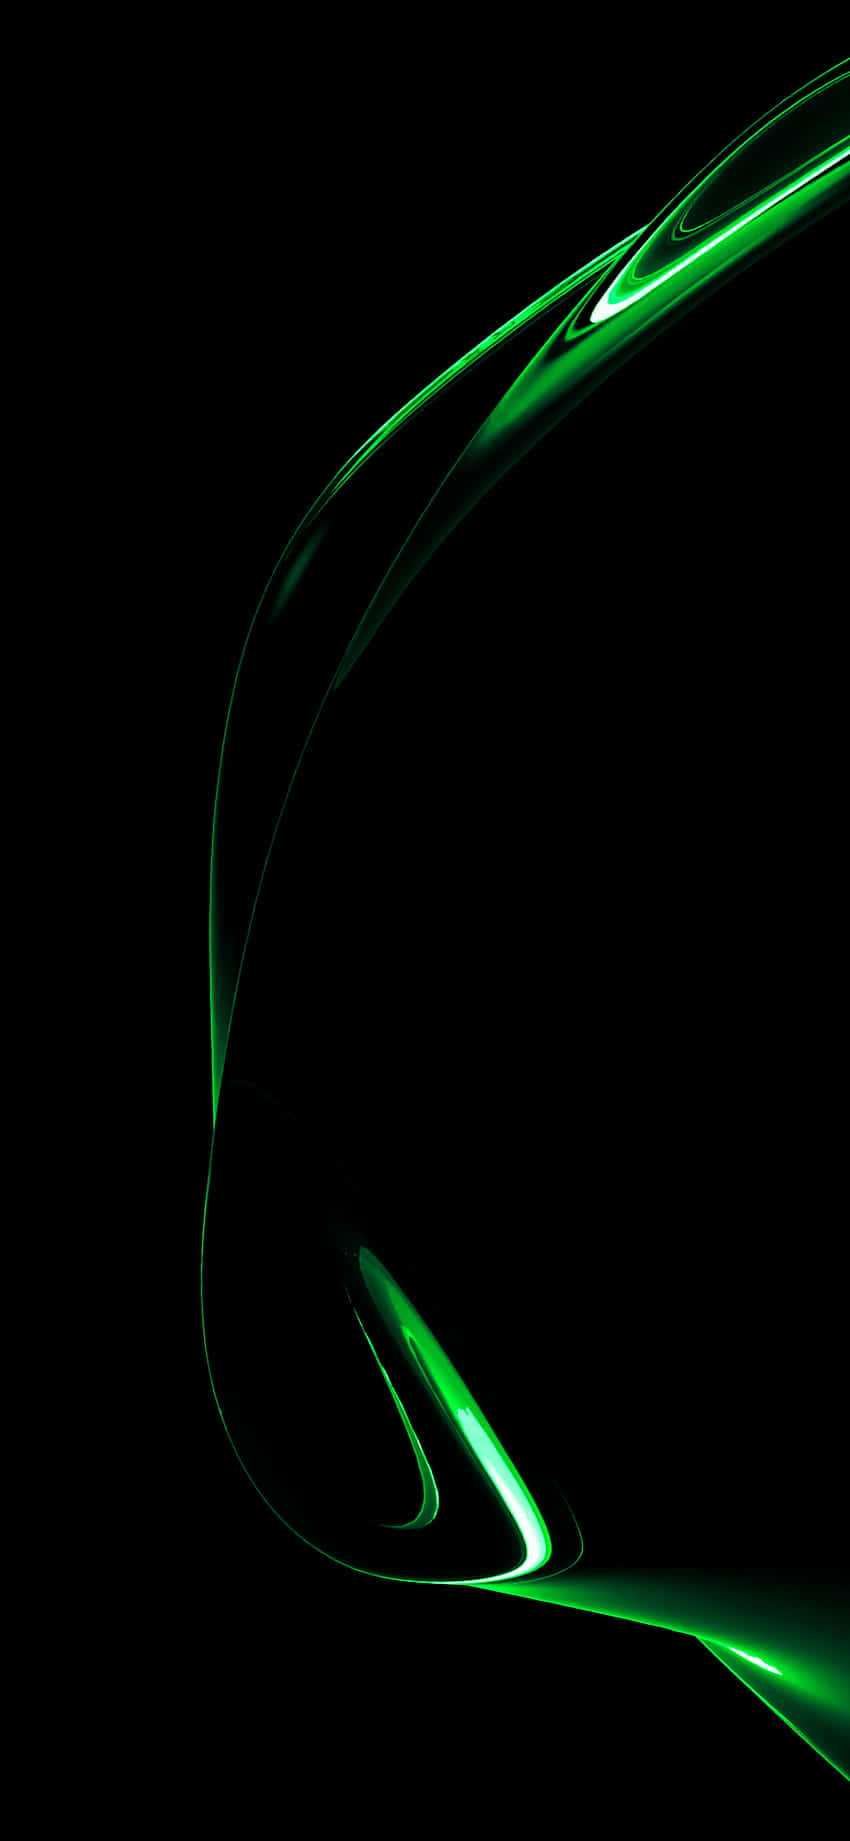 En grøn lys skinner på en sort baggrund. Wallpaper